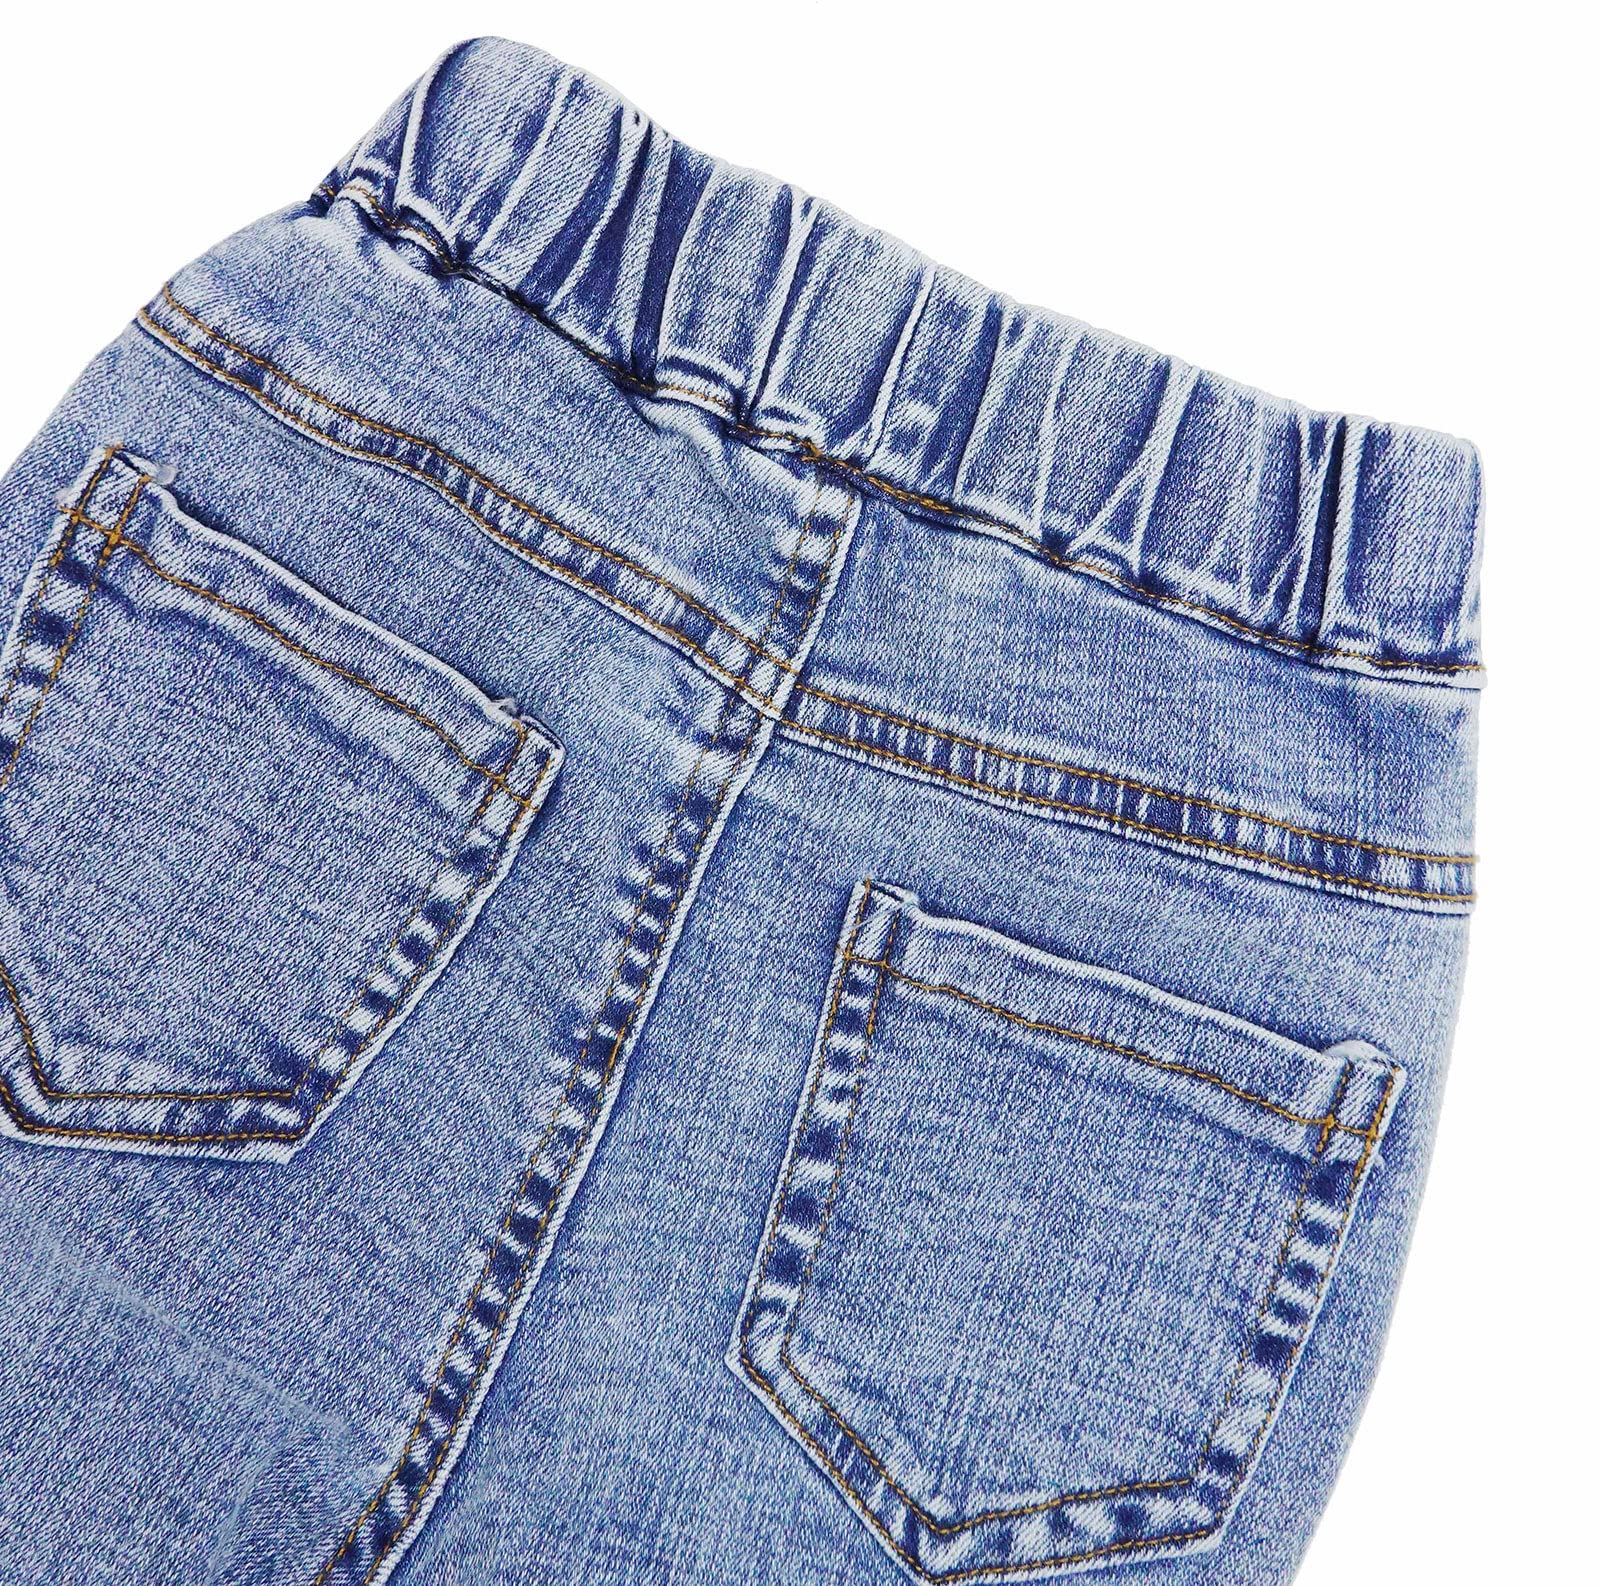 KIDSCOOL SPACE Boy Girl Jeans,Kid Elastic Ripped Casual Denim Pants